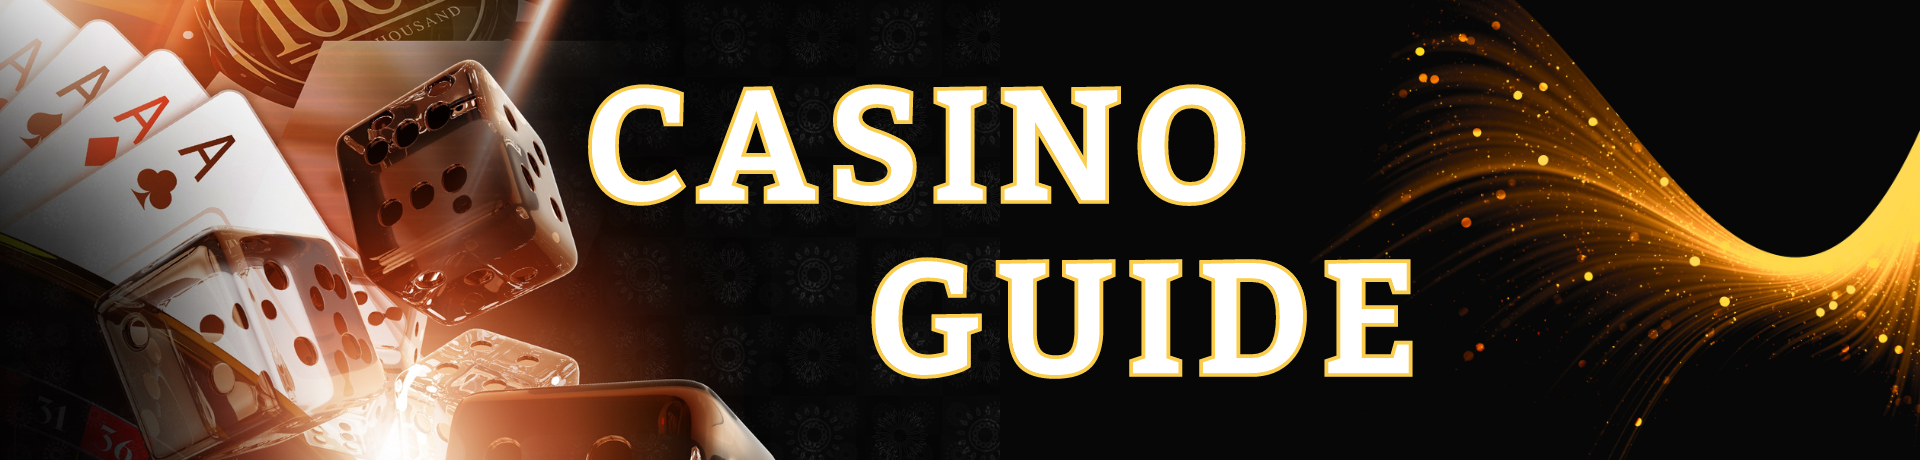 Megapanalo Casino Guide Banner